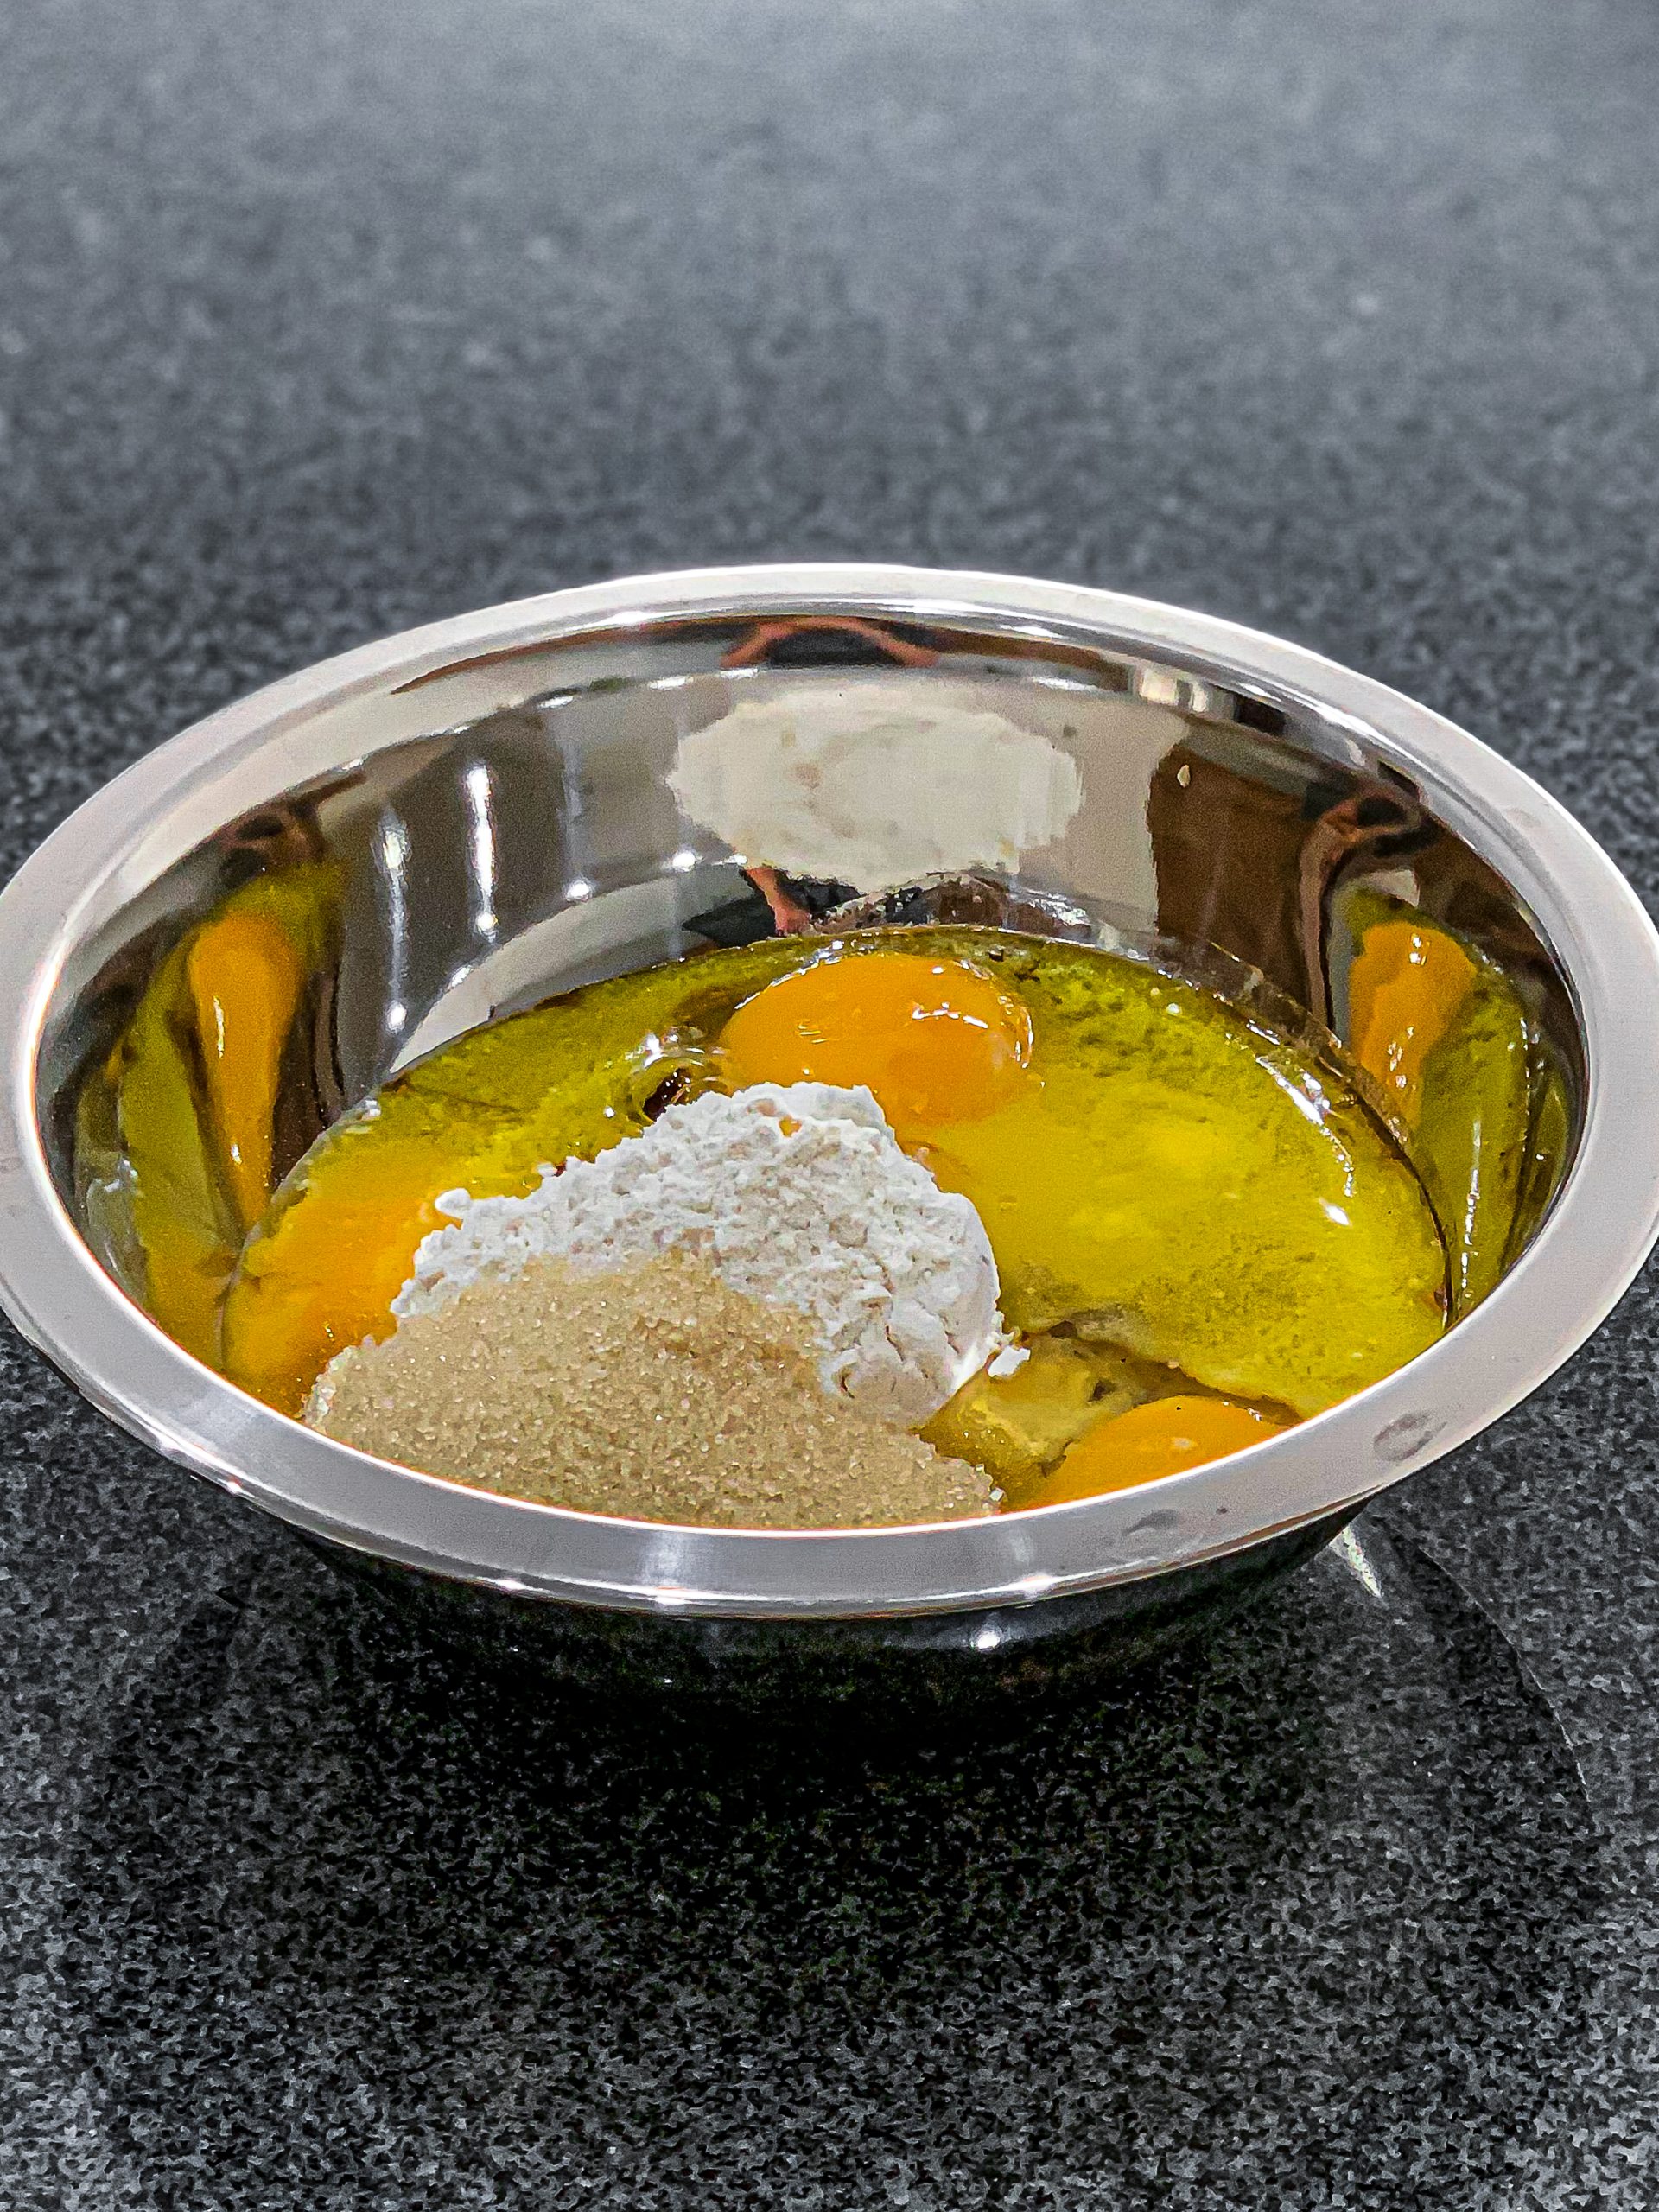 In a medium bowl, add the butter, sugar, eggs, flour and vanilla.